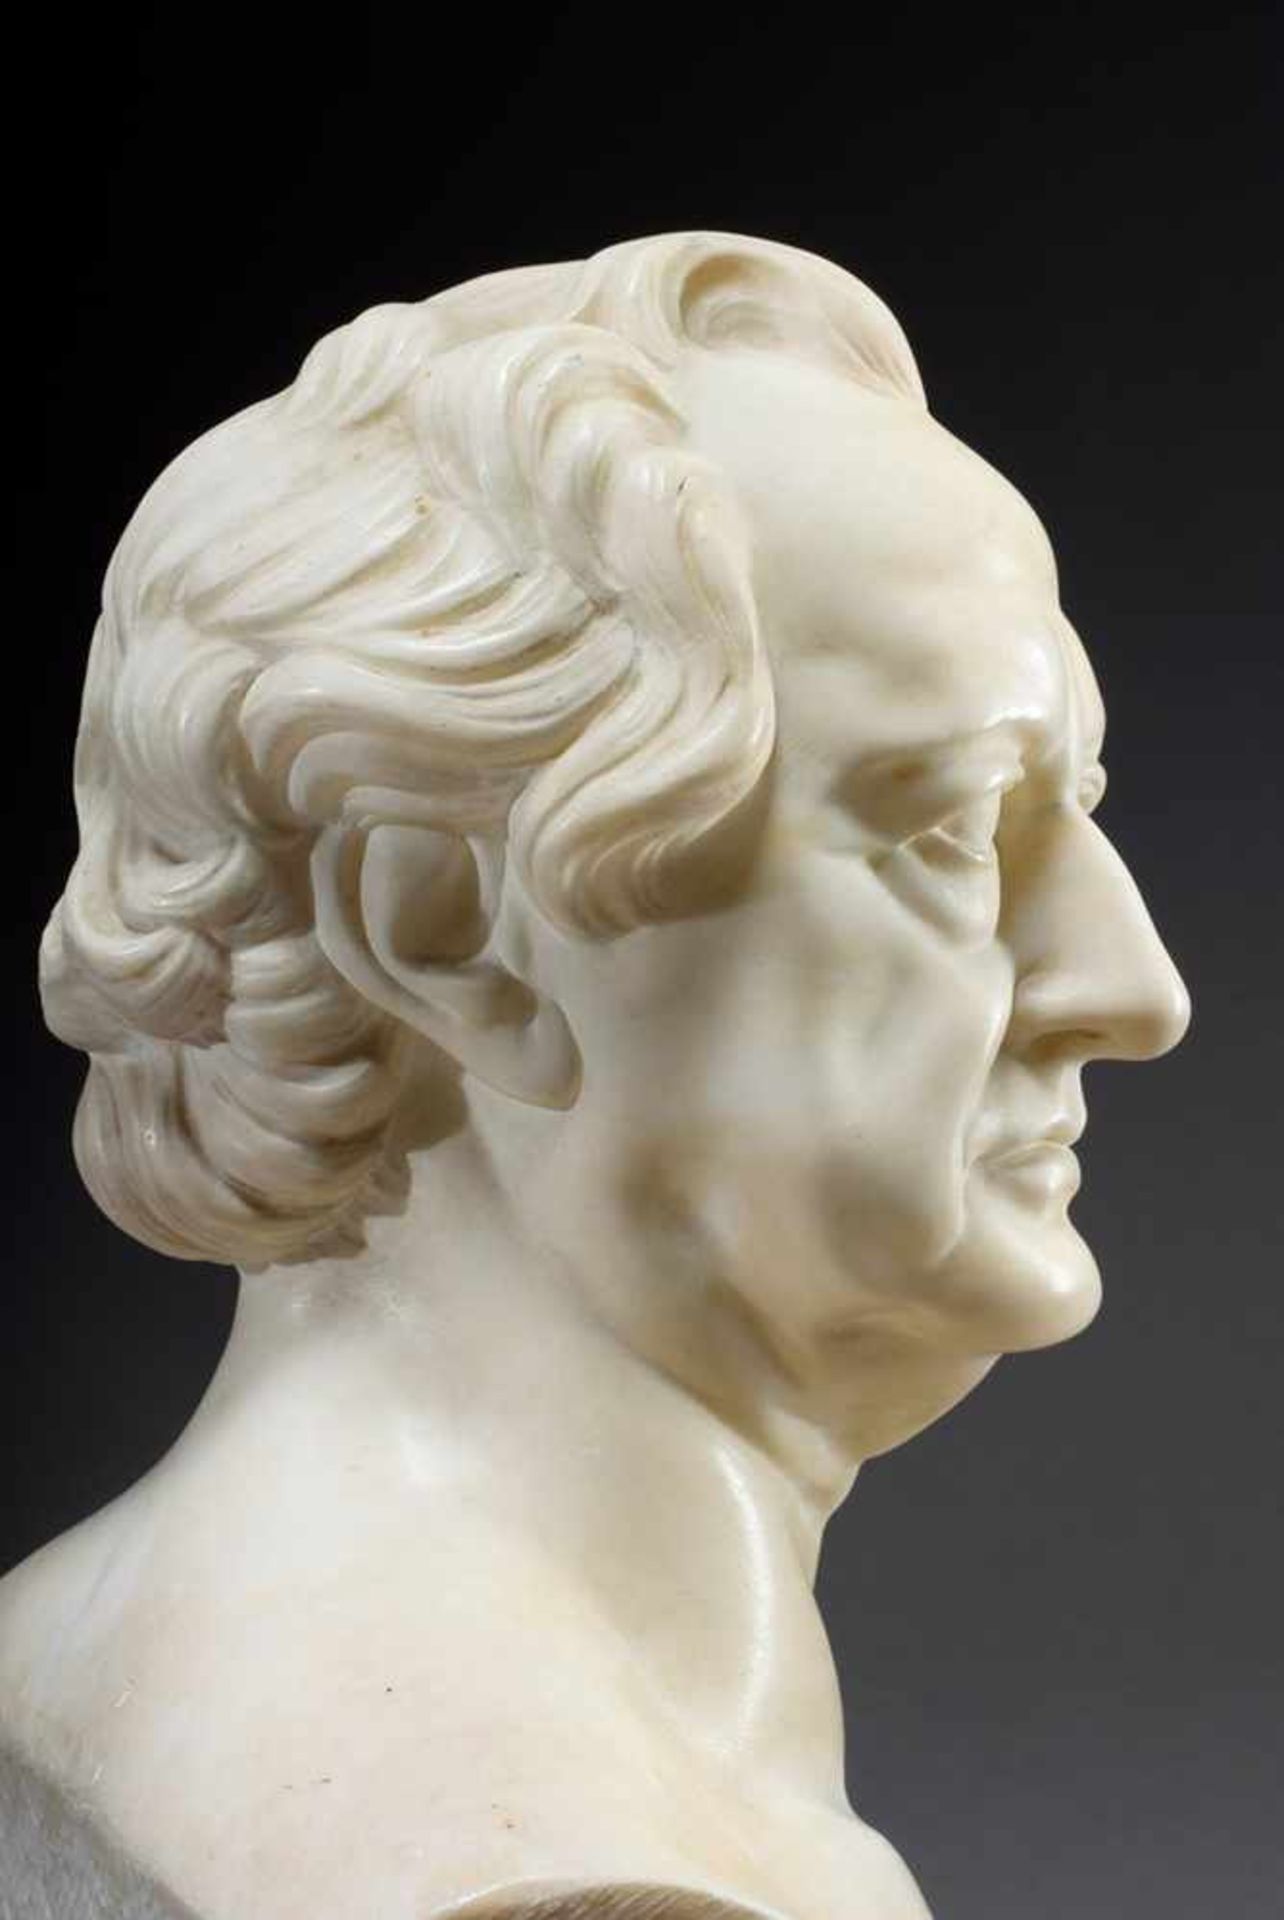 Gallet, Louis Jacques (1873-1955) "A-Tempo bust of Johann Wolfgang von Goethe" after Christian - Bild 6 aus 9